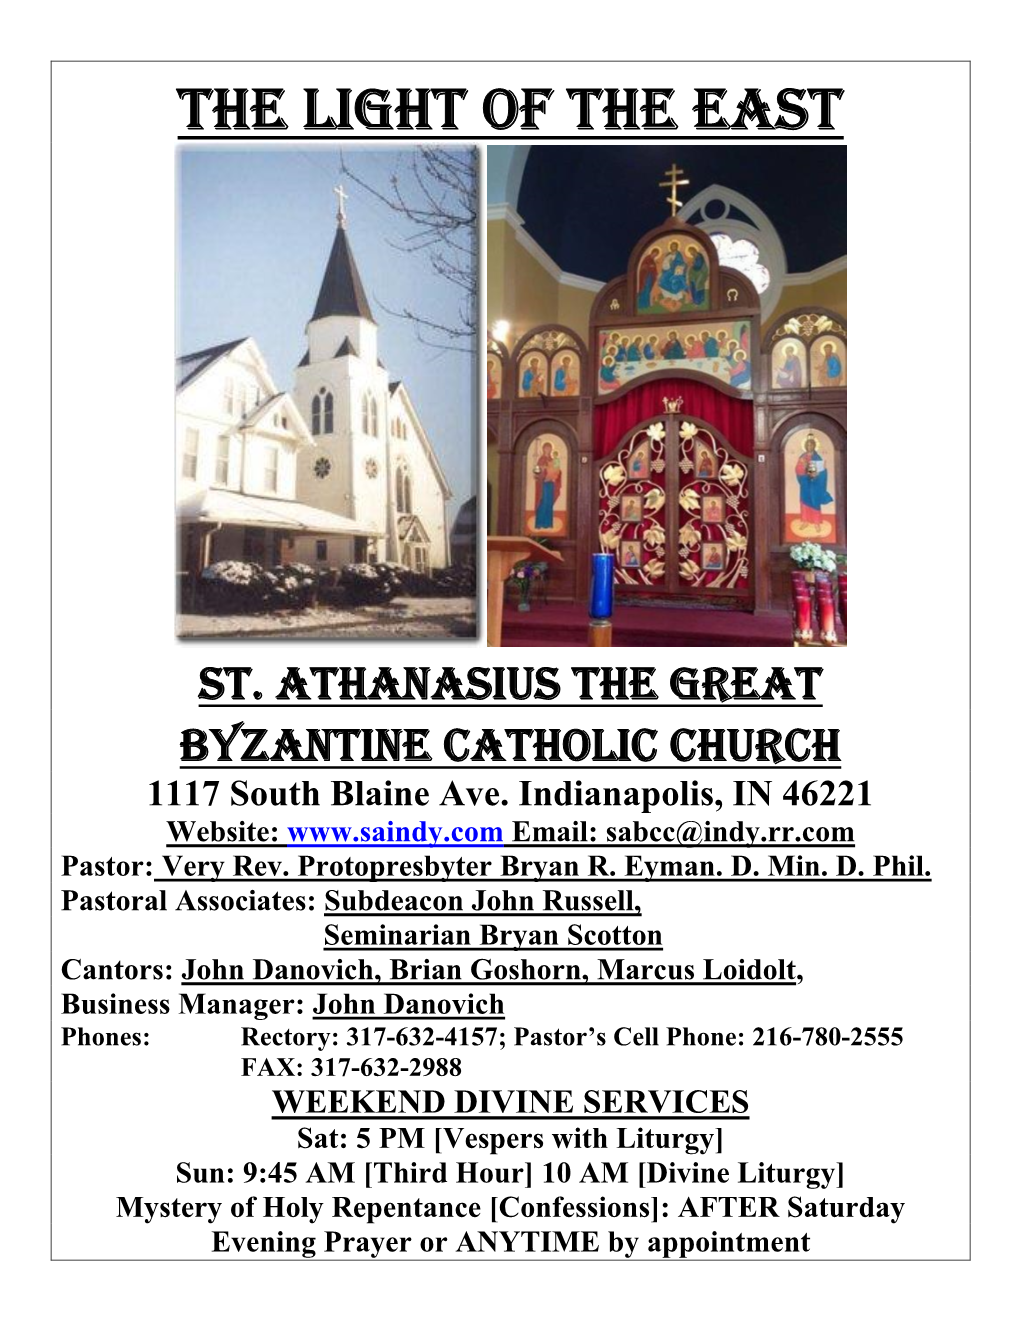 St. Athanasius the Great Byzantine Catholic Church 1117 South Blaine Ave